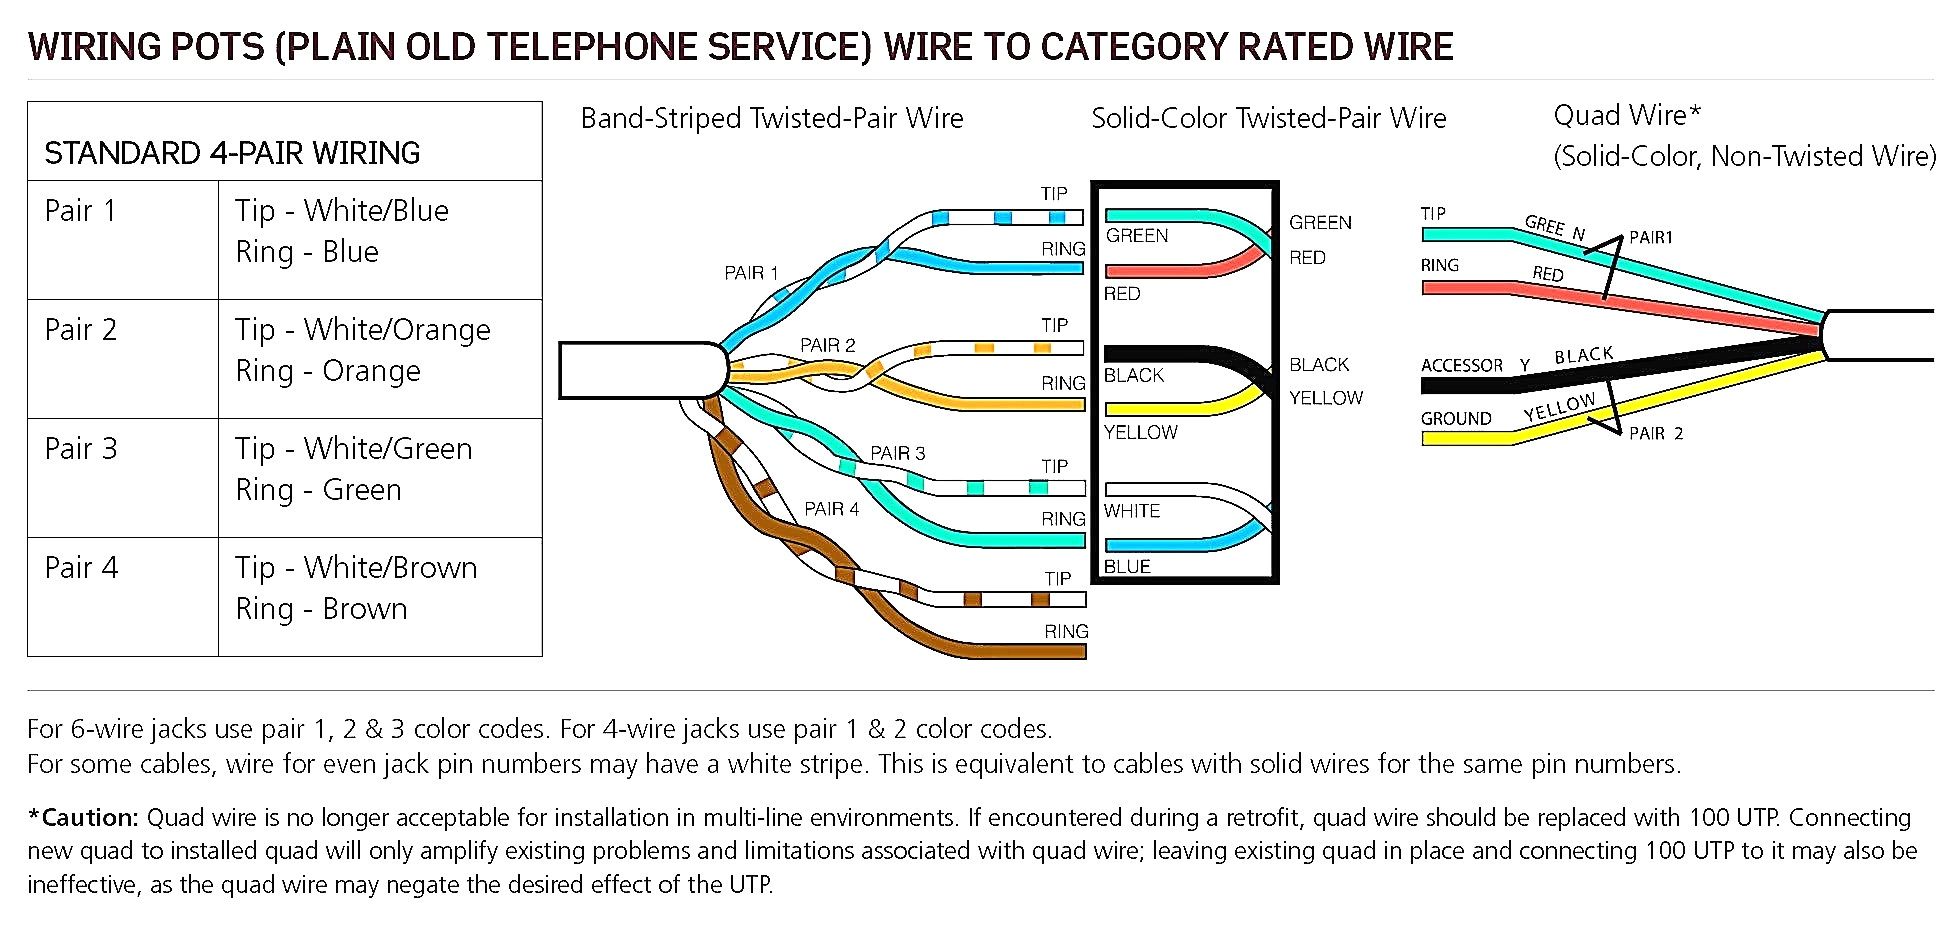 telephone wiring code wiring diagram user colored telephone cable wiring diagram